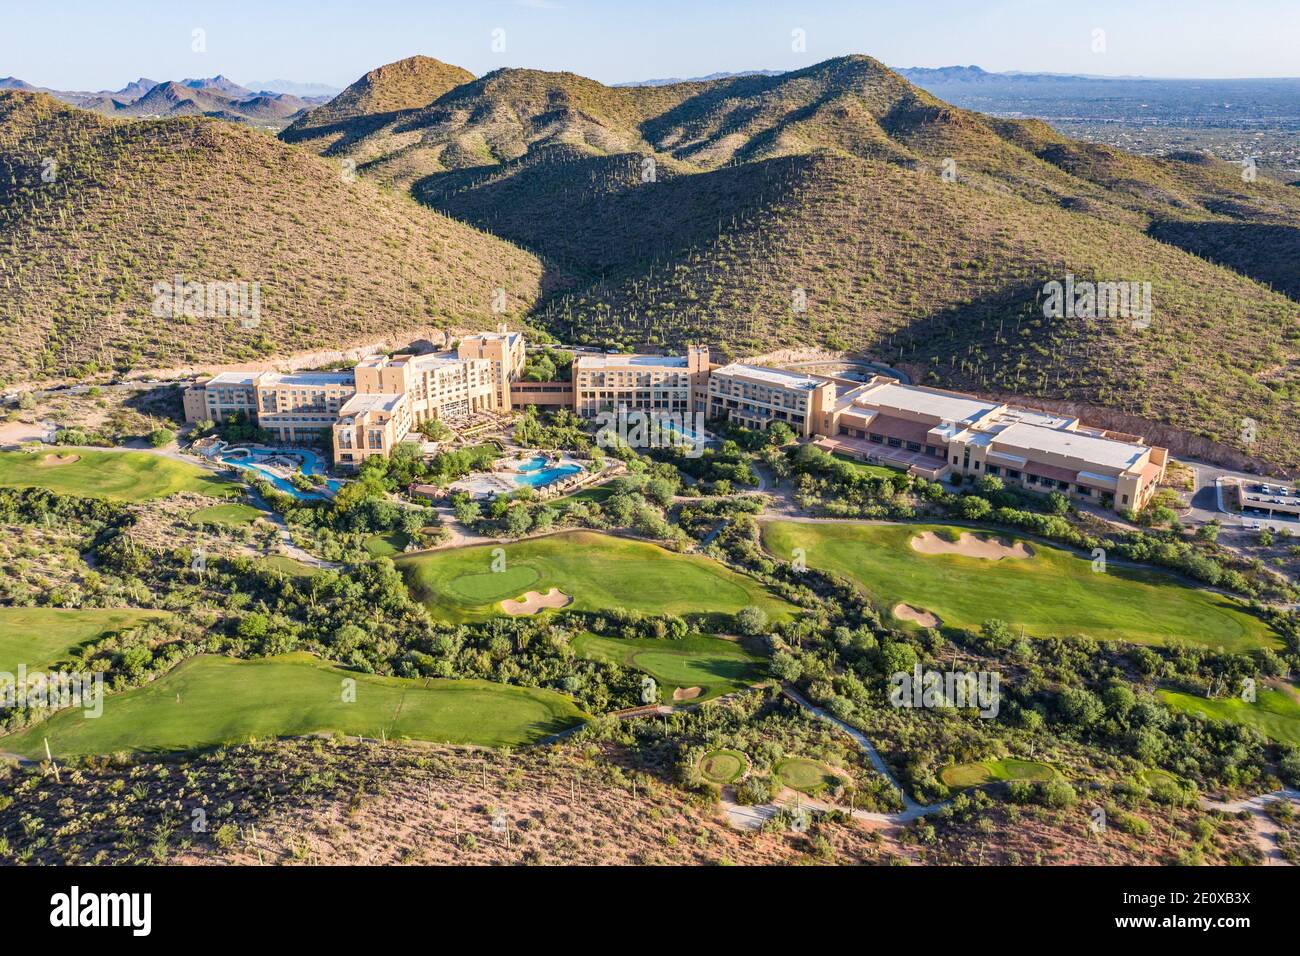 JW Marriott Starr Pass Resort Hotel, Tuscon, AZ, États-Unis Banque D'Images